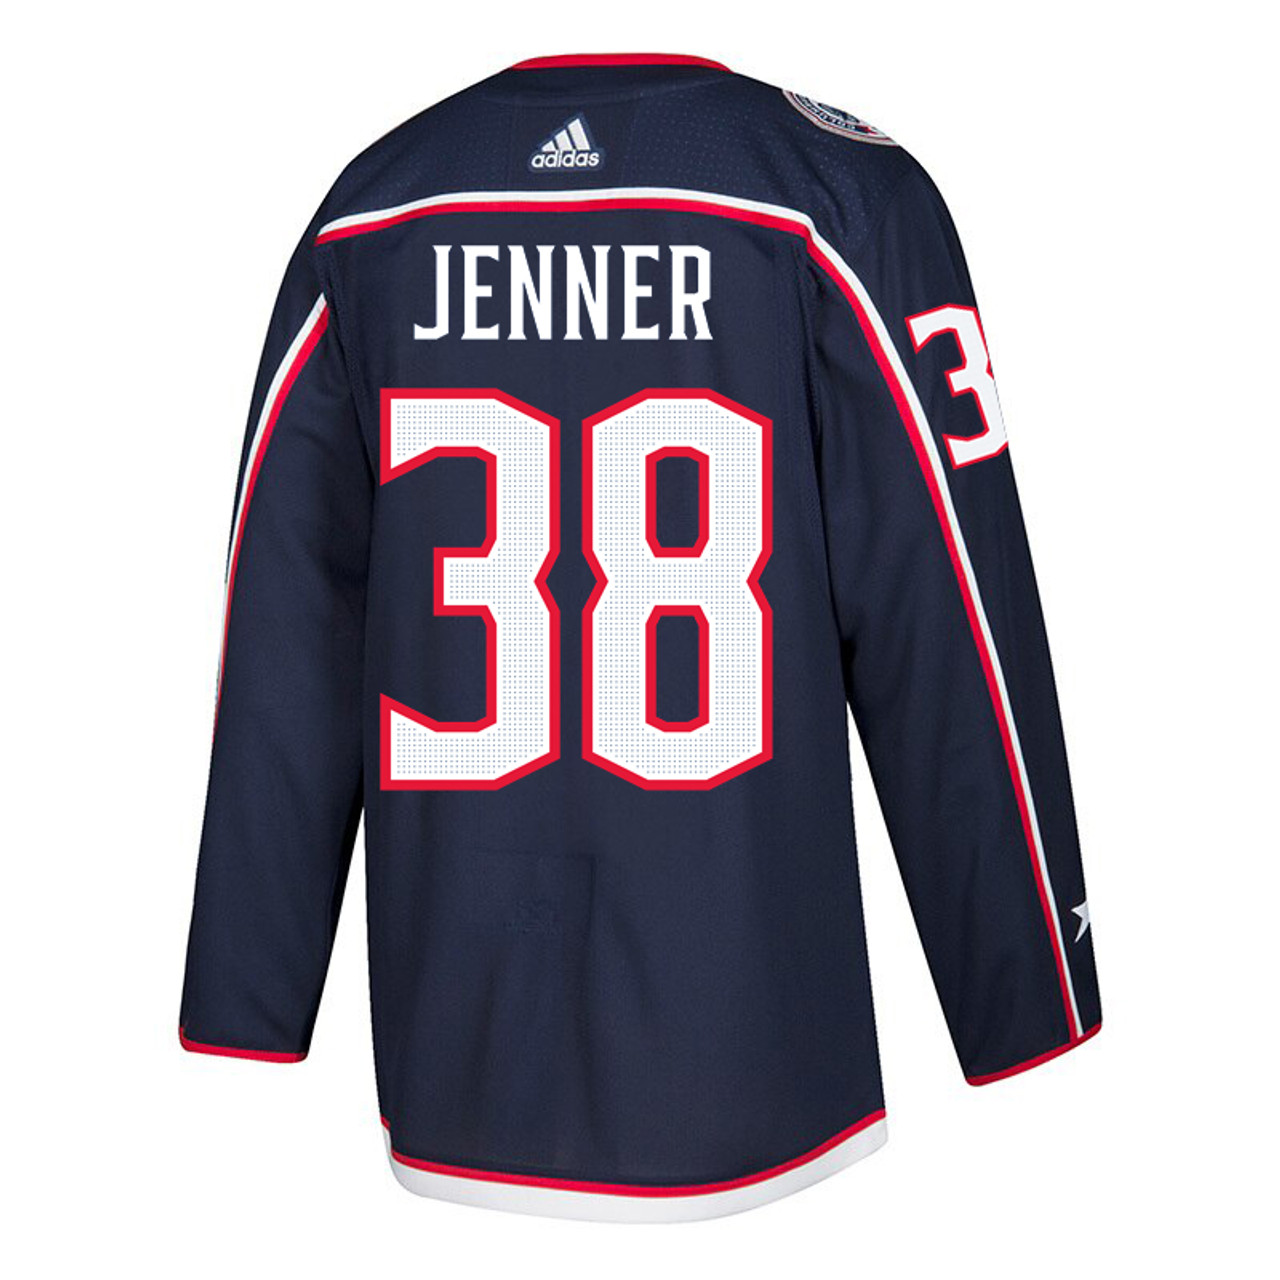 Boone Jenner Columbus Blue Jackets Home Breakaway Player Jersey - Navy